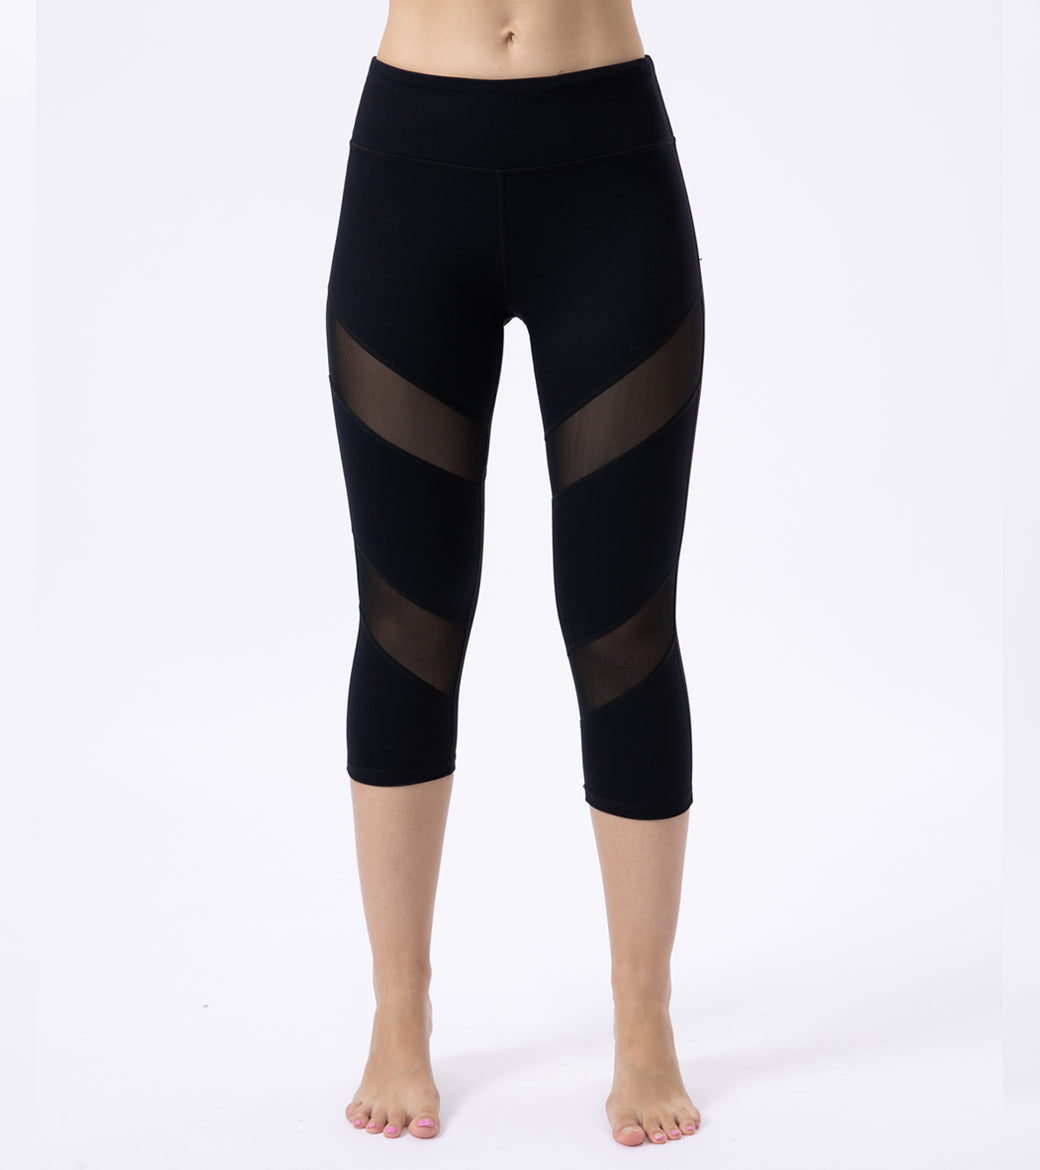 LOVESOFT Black Mesh Workout High Waist Yoga Pants